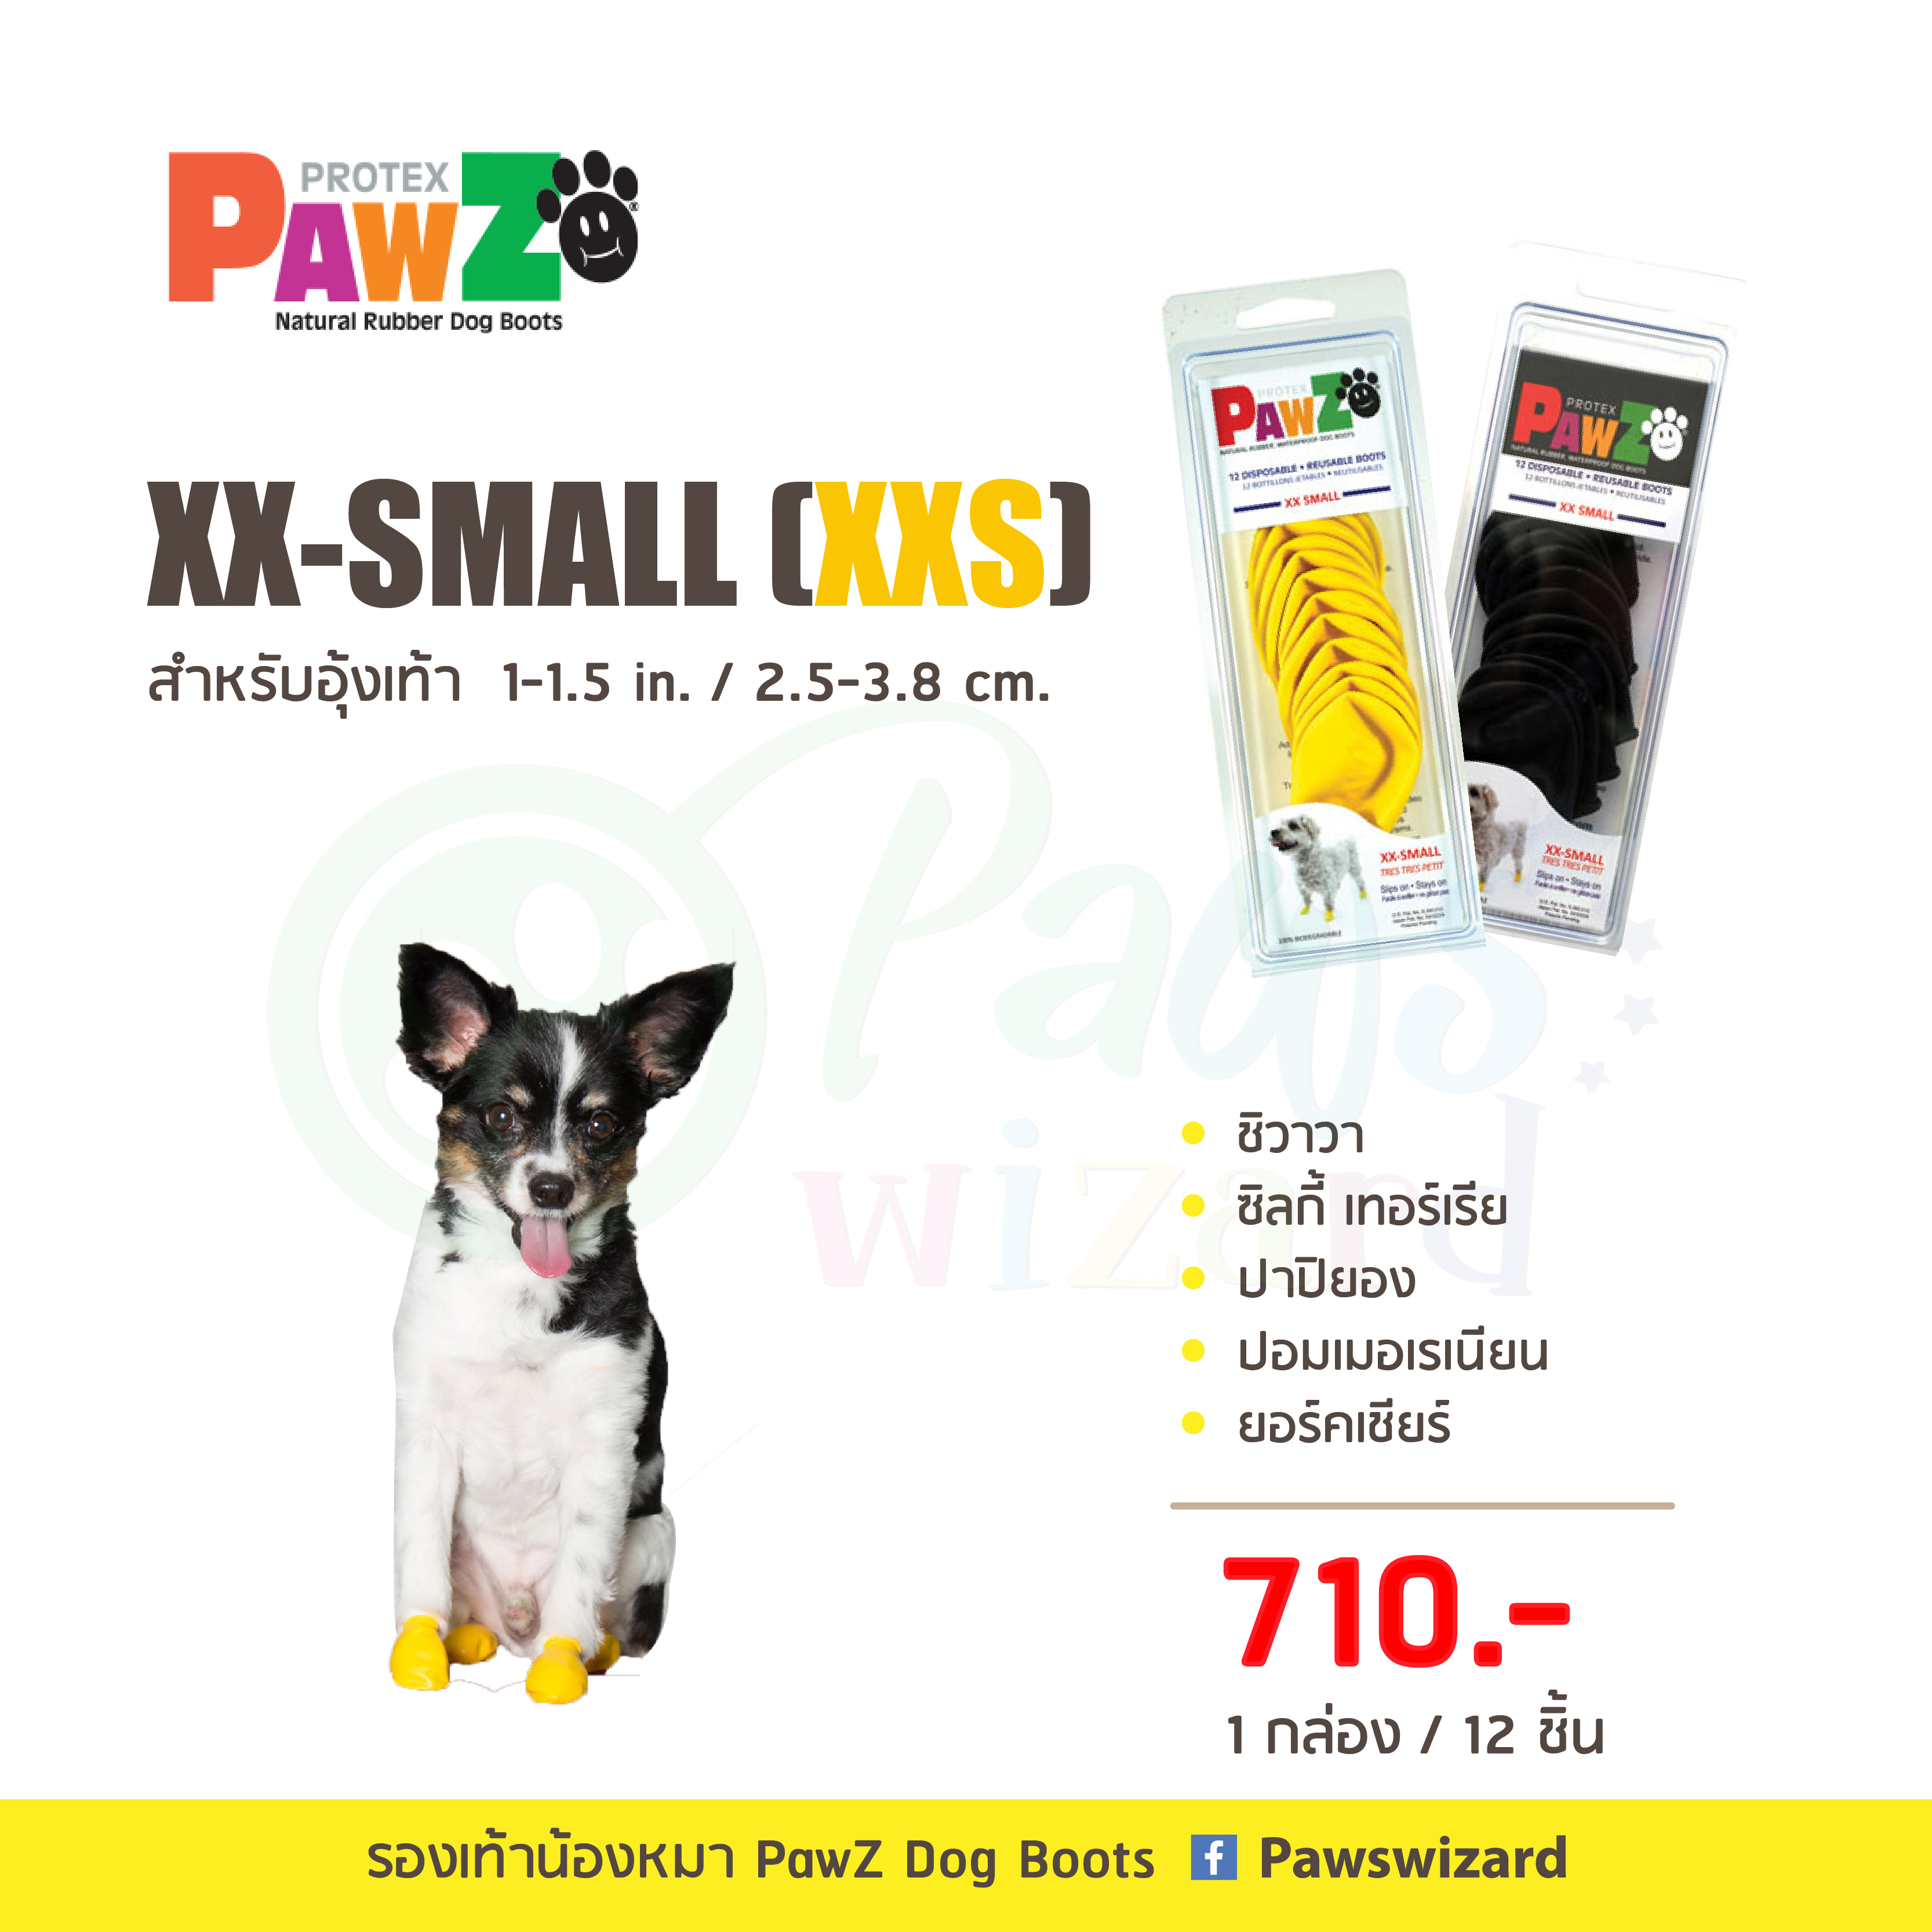 PawZ Dog Boots รองเท้าสุนัข(12ชิ้น) รองเท้าสุนัขกันลื่นกันน้ำ ไซส์ XX-SMALL (XXS) สำหรับอุ้งเท้า 1-1.5 in. / 2.5-3.8 cm.